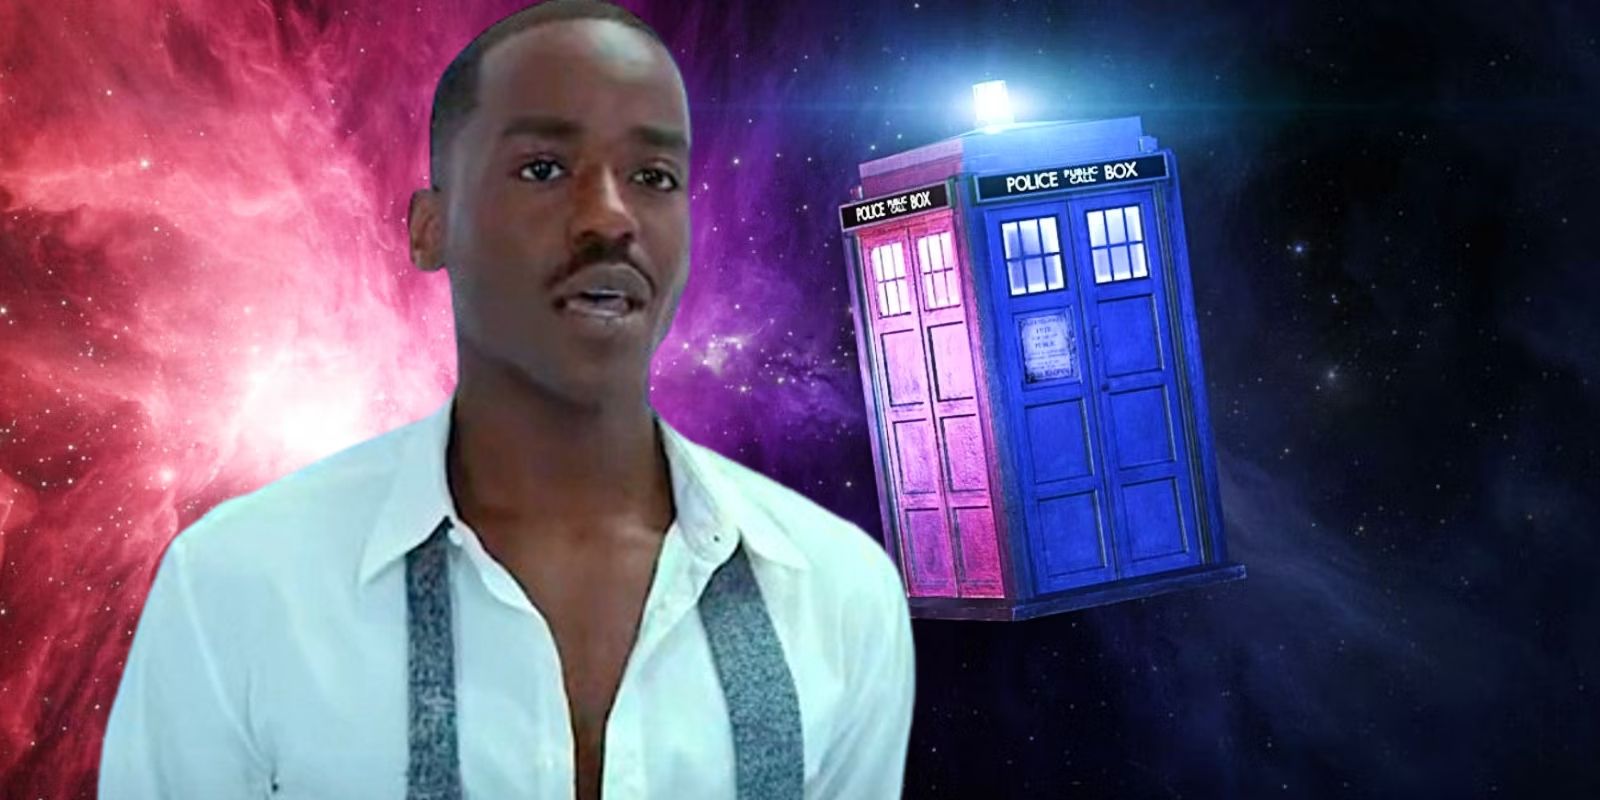 La característica clásica de Doctor Who TARDIS regresará, confirma Russell T. Davies